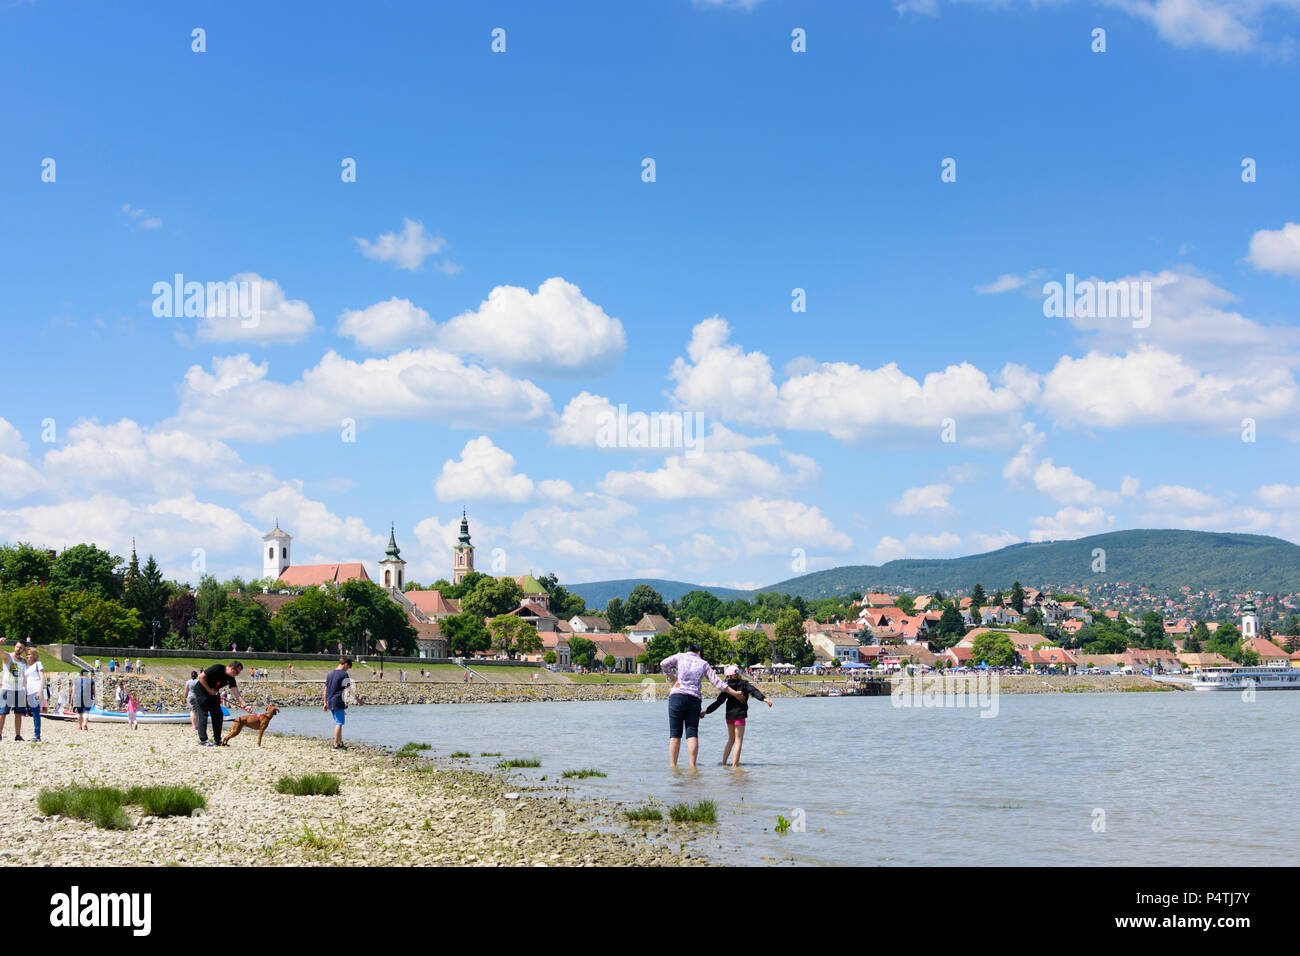 Szentendre (Sankt Andrä): Szentendre Danube, beach, Old Town, Pilis Mountains, ship in Hungary, Pest, Stock Photo